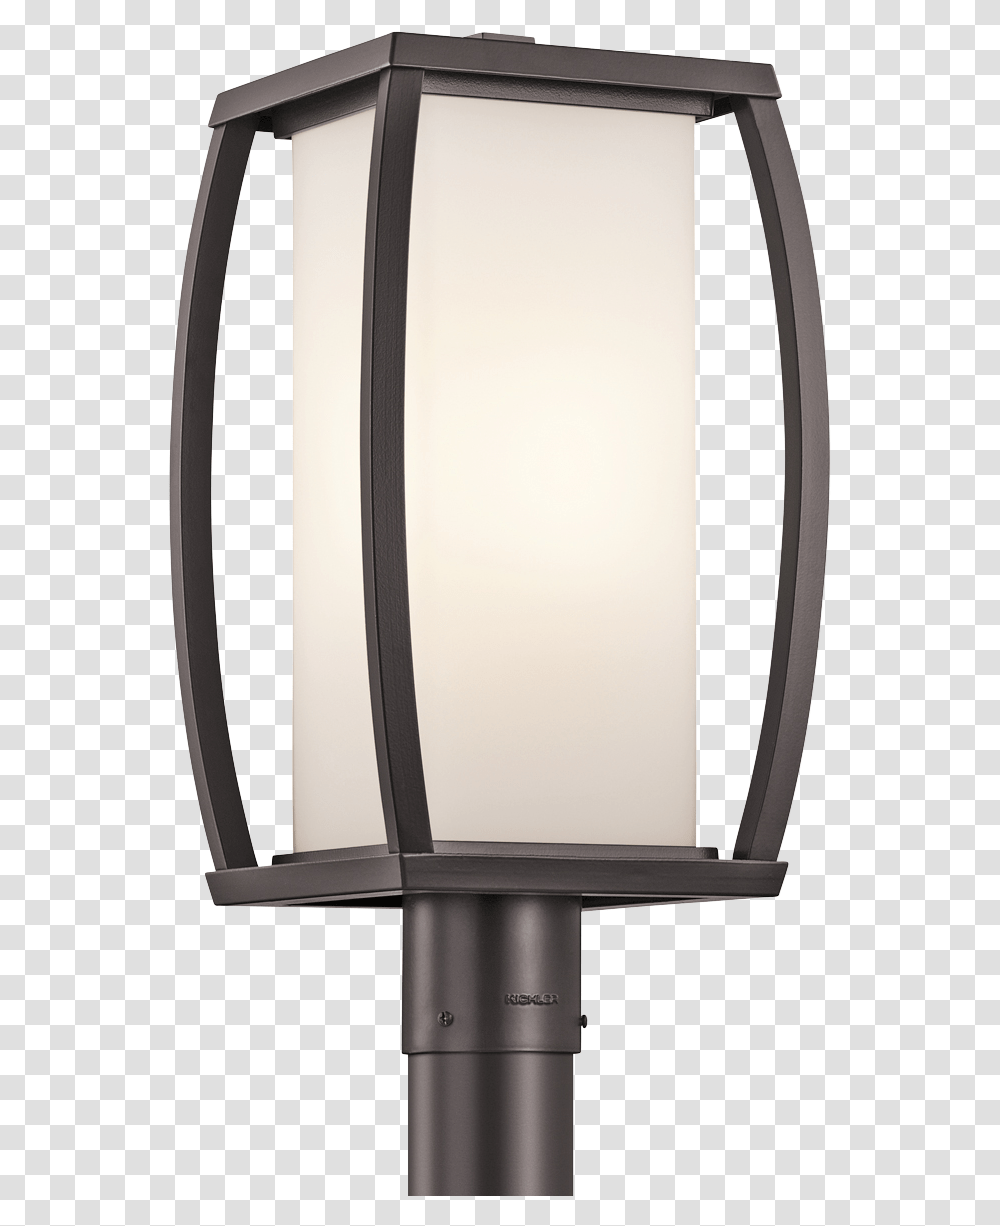 Post Lt Az Loading Street Light, Lamp, Lampshade, Lantern, Appliance Transparent Png